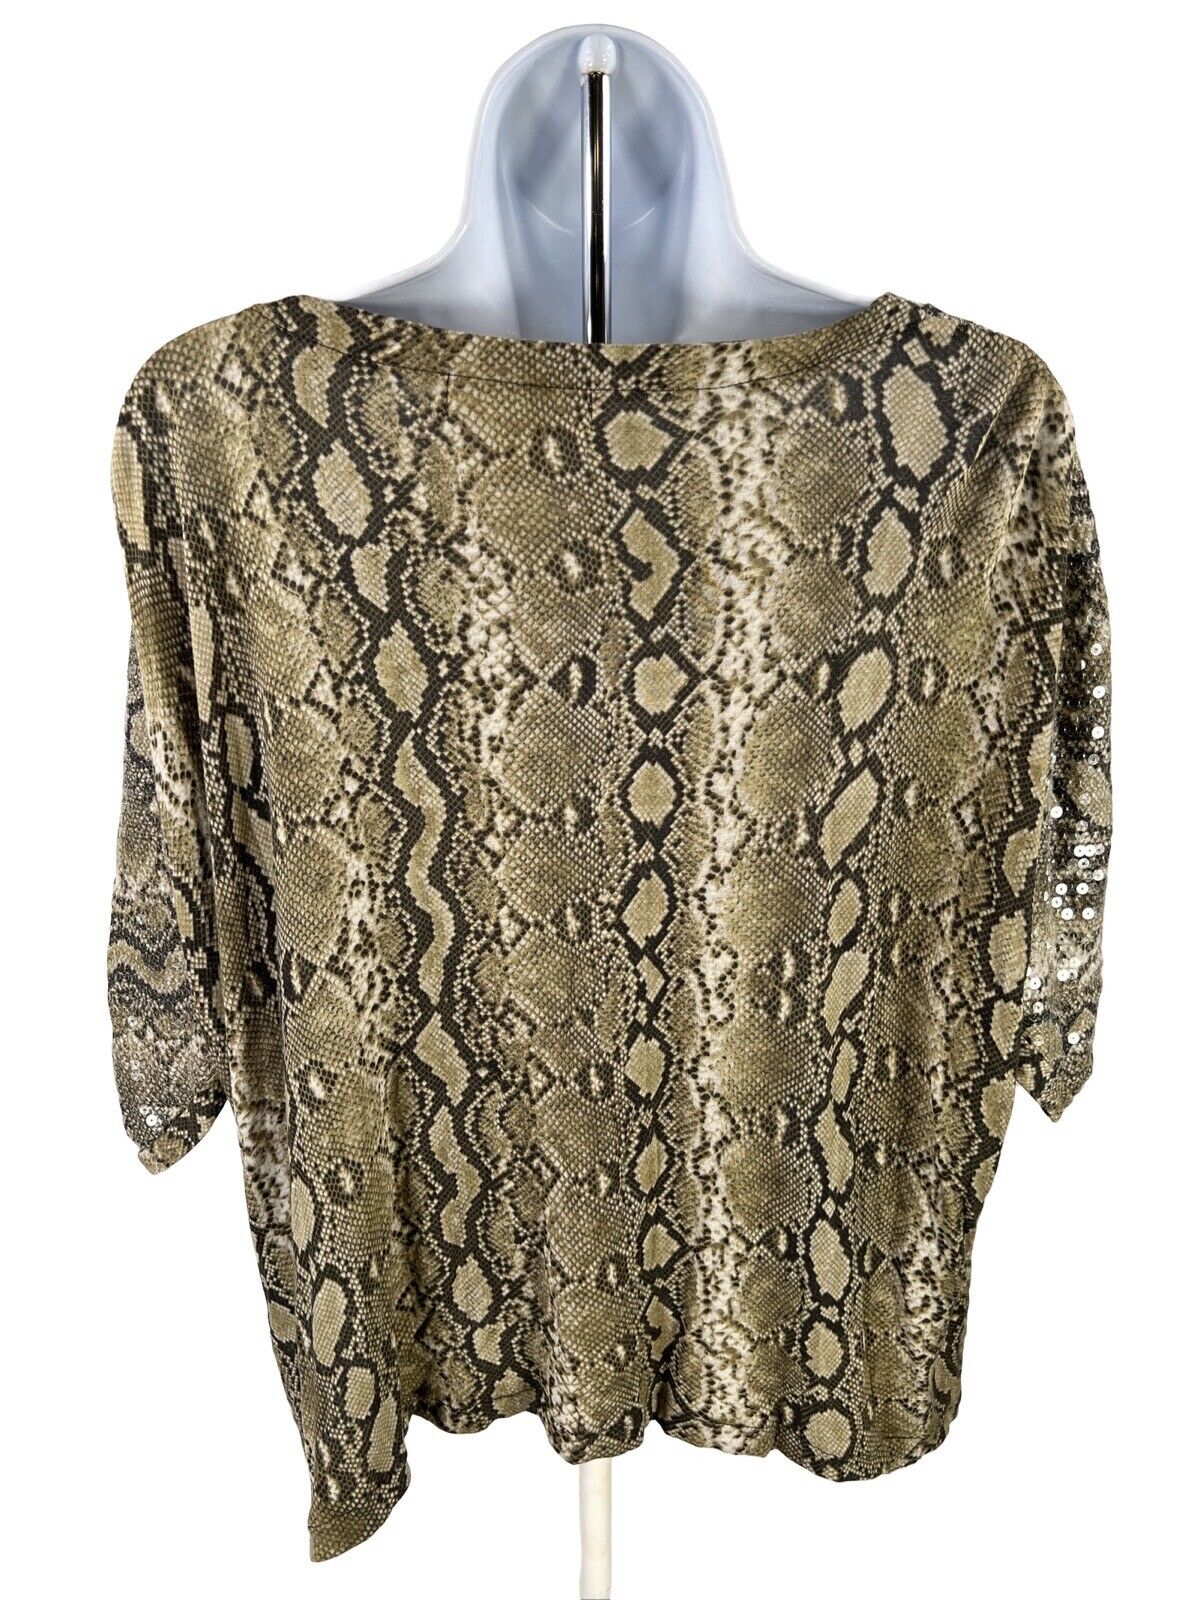 Michael Kors Women's Snake Print Sequin Short Sleeve Top - L